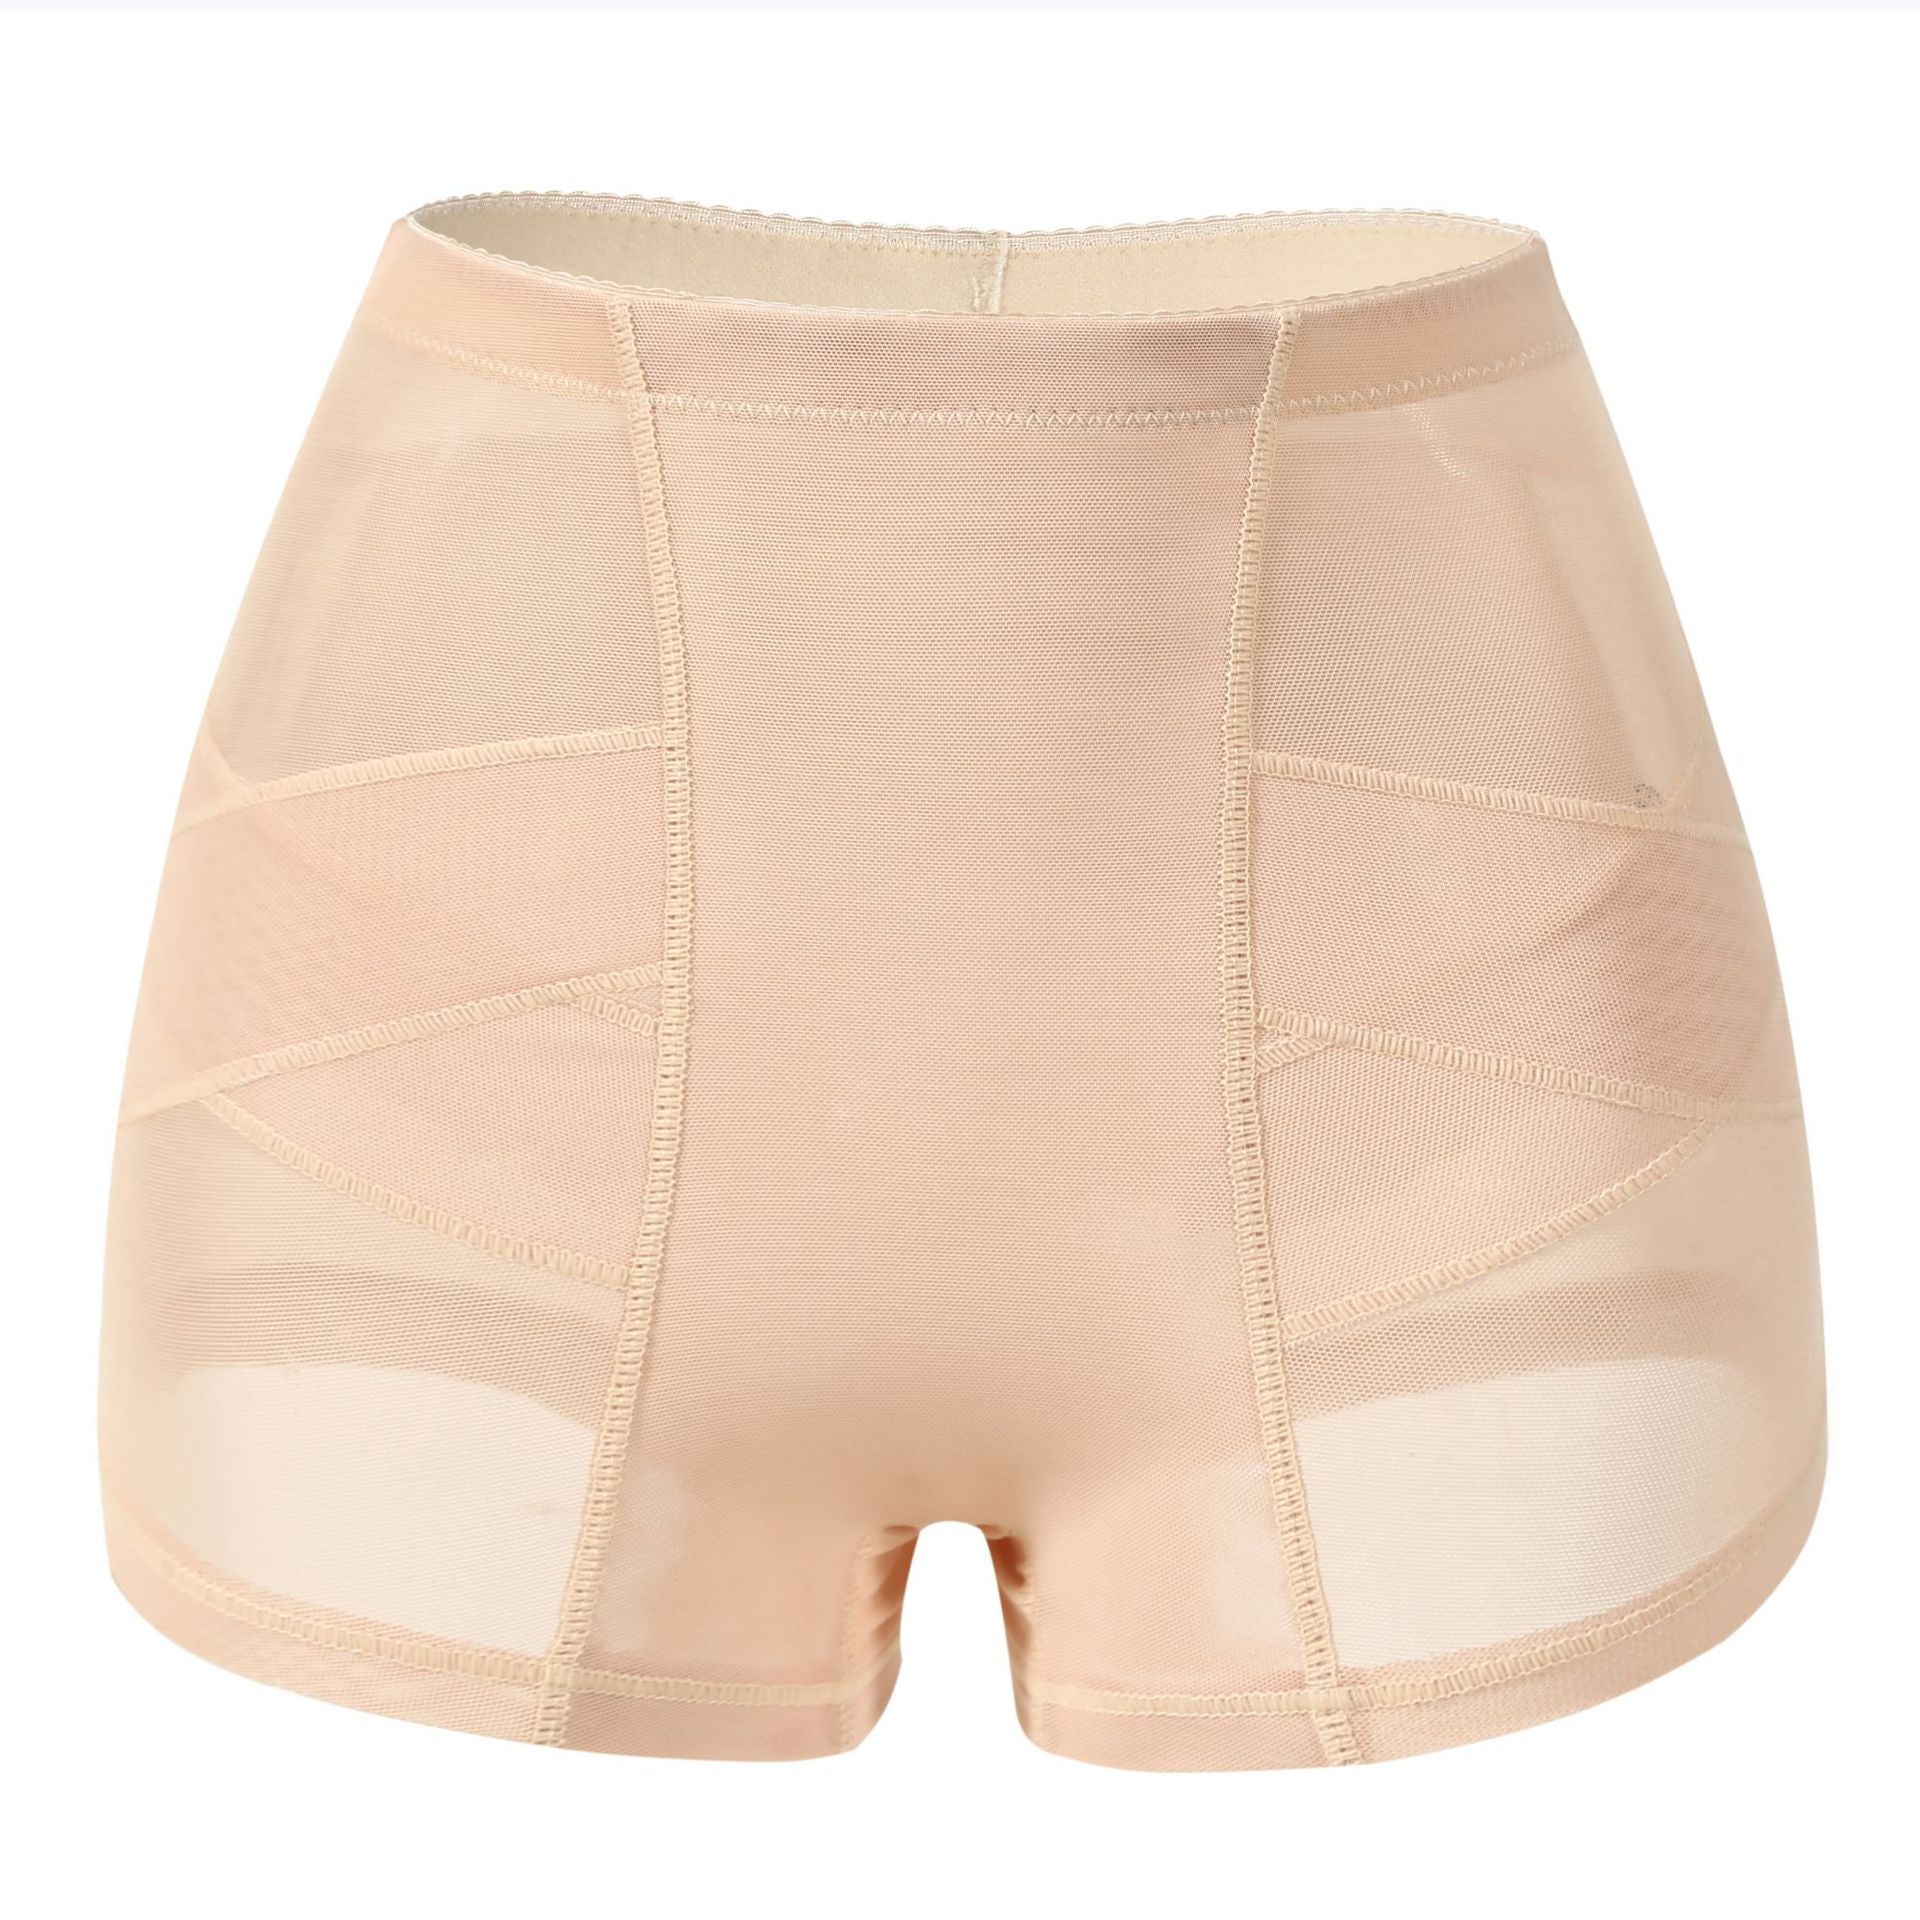 Body Shaping Tummy Lifting Shapewear Sponge Padded Buttock Enhancement Bottom Panties